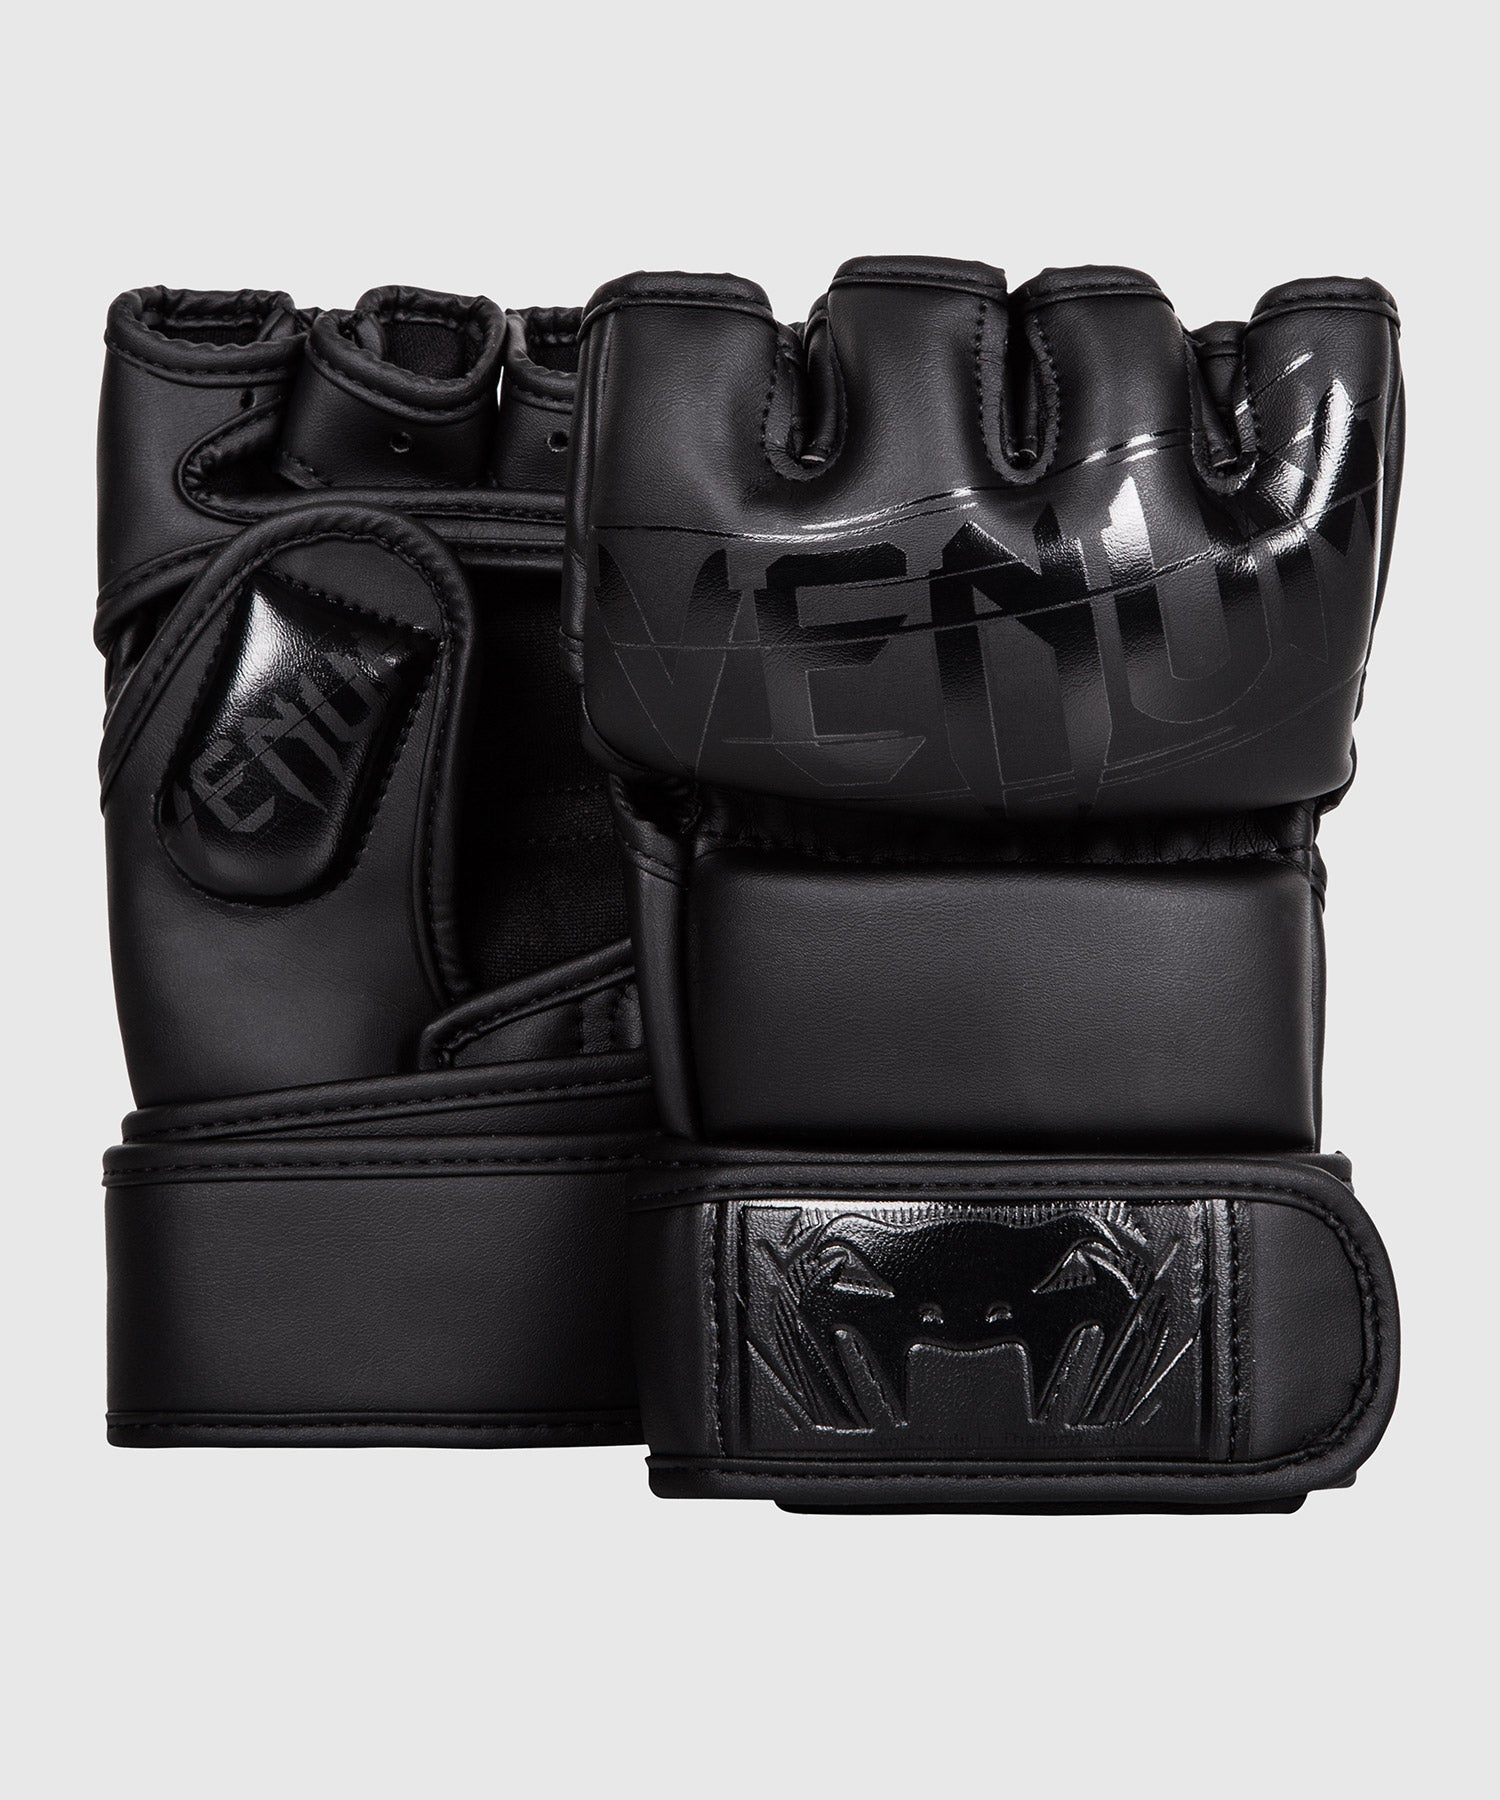 guantes venum MMA